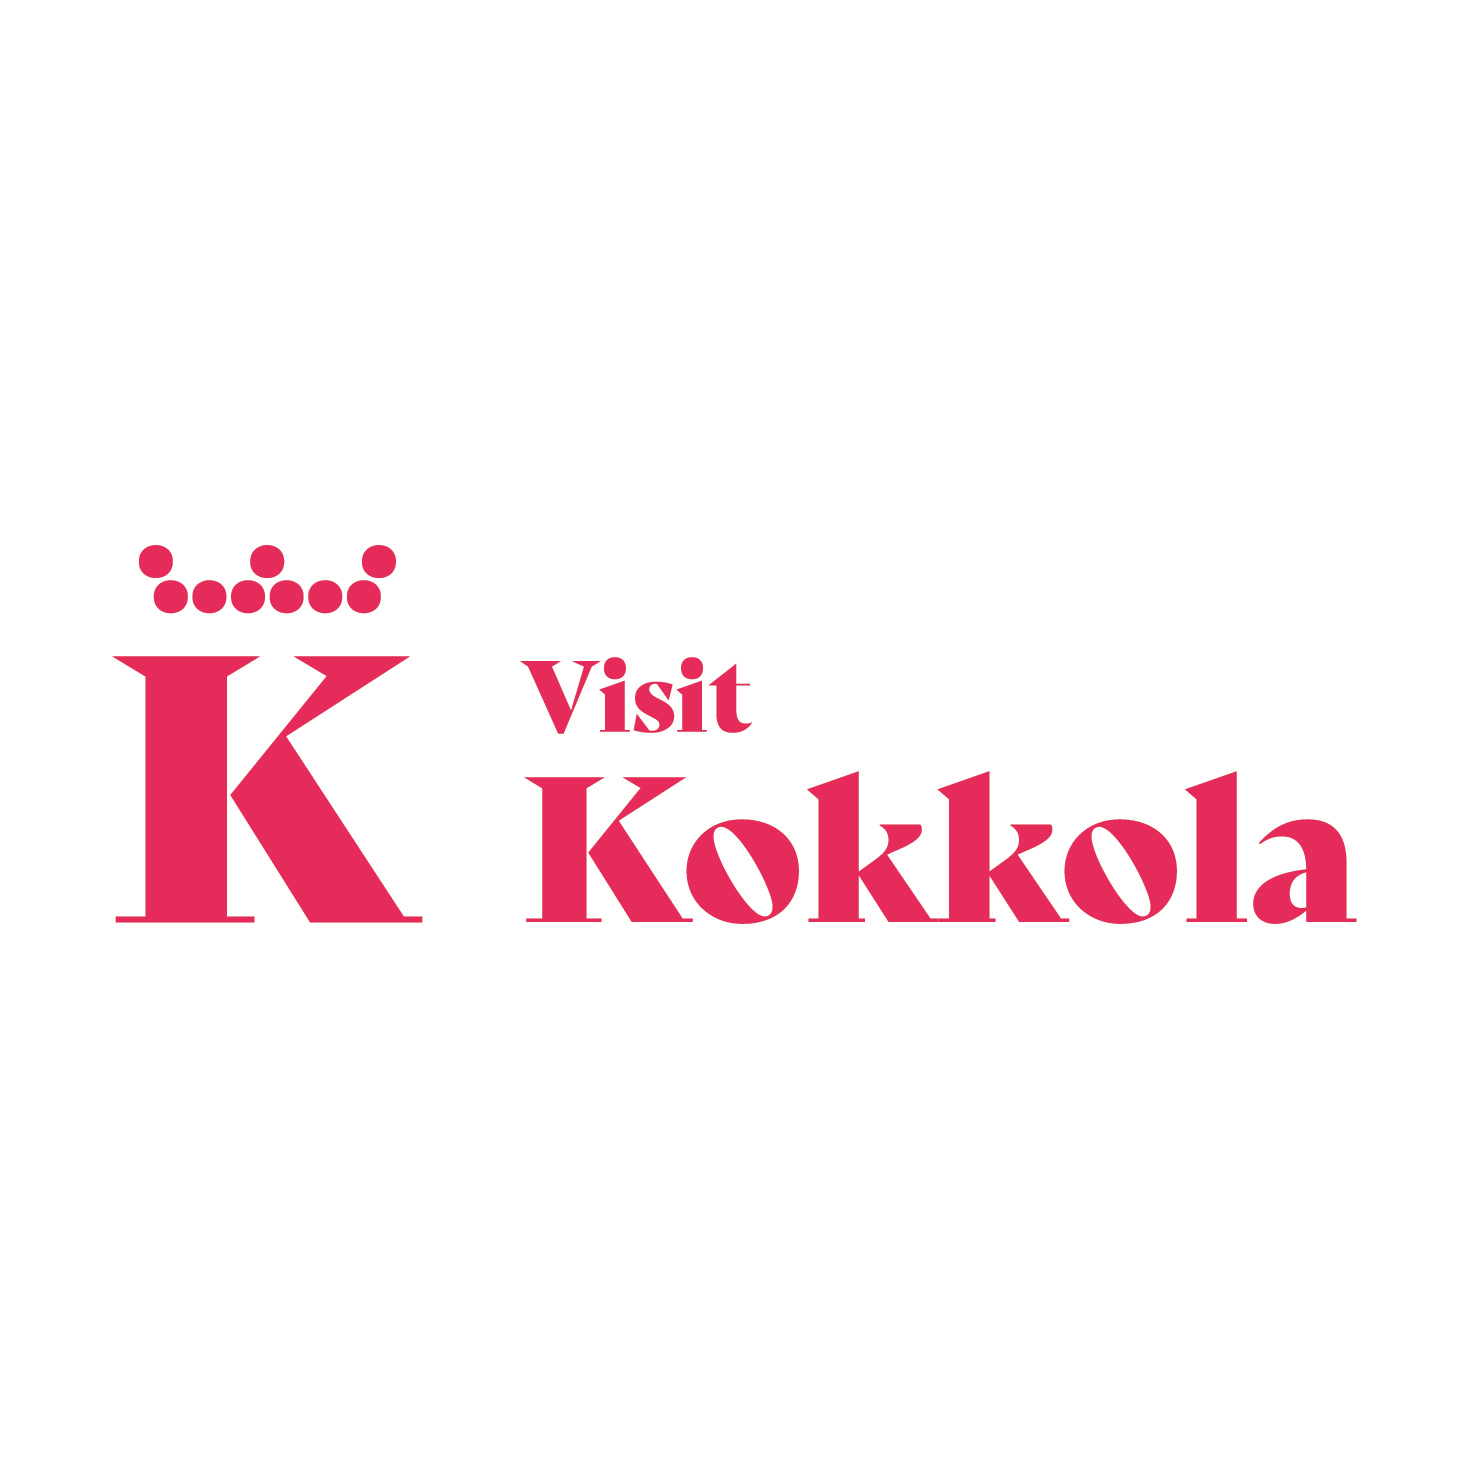 Visit Kokkola - Kokkola Tourism Ltd